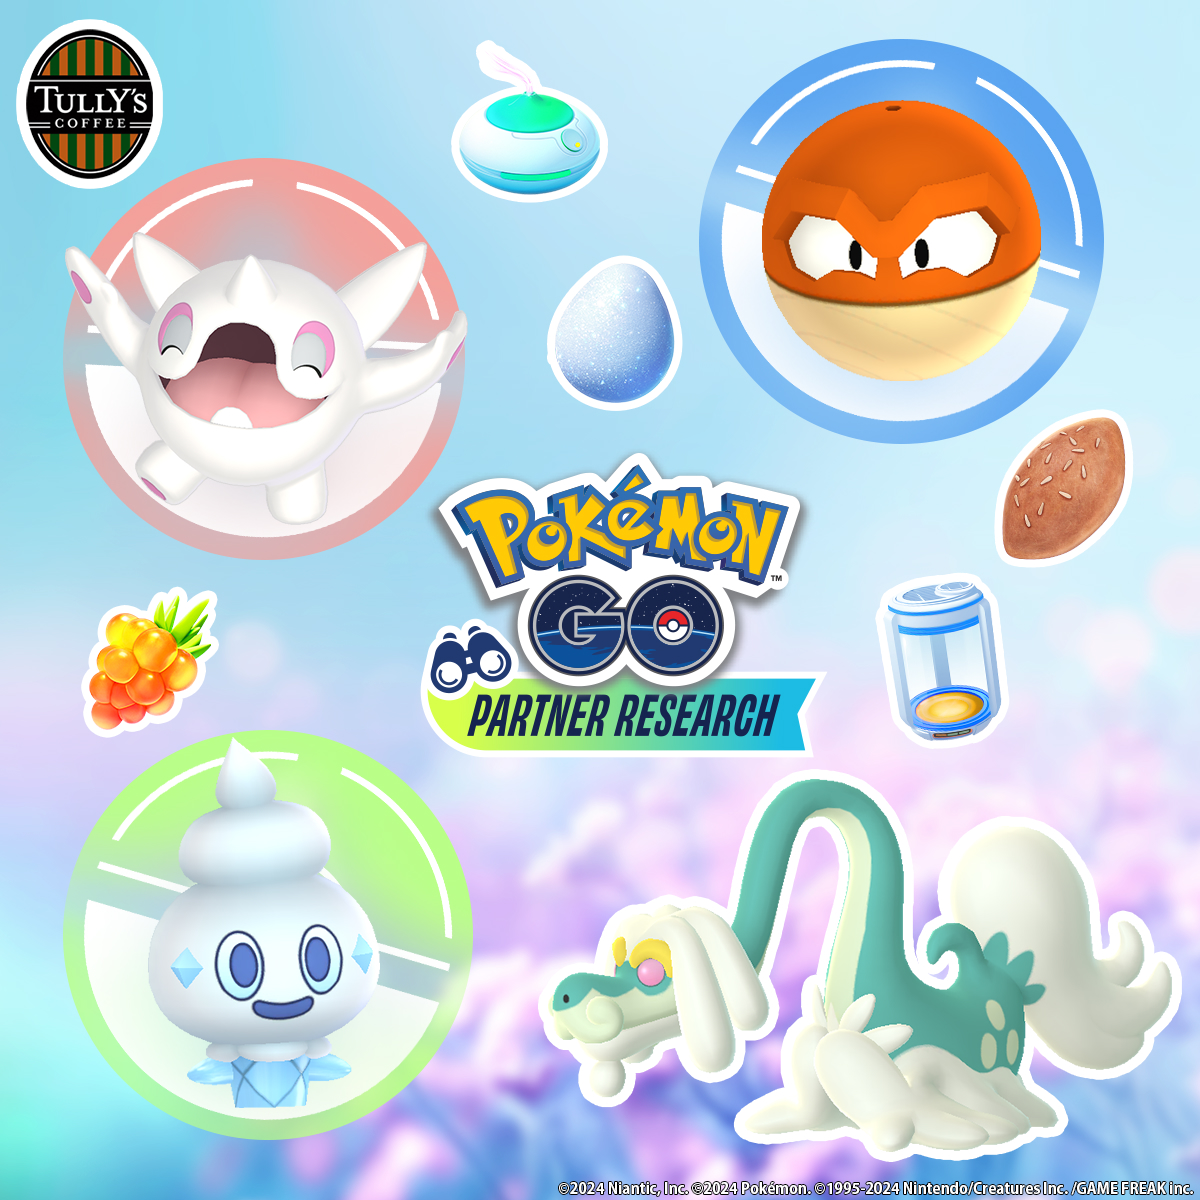 Pokémon GO PARTNER RESEARCH